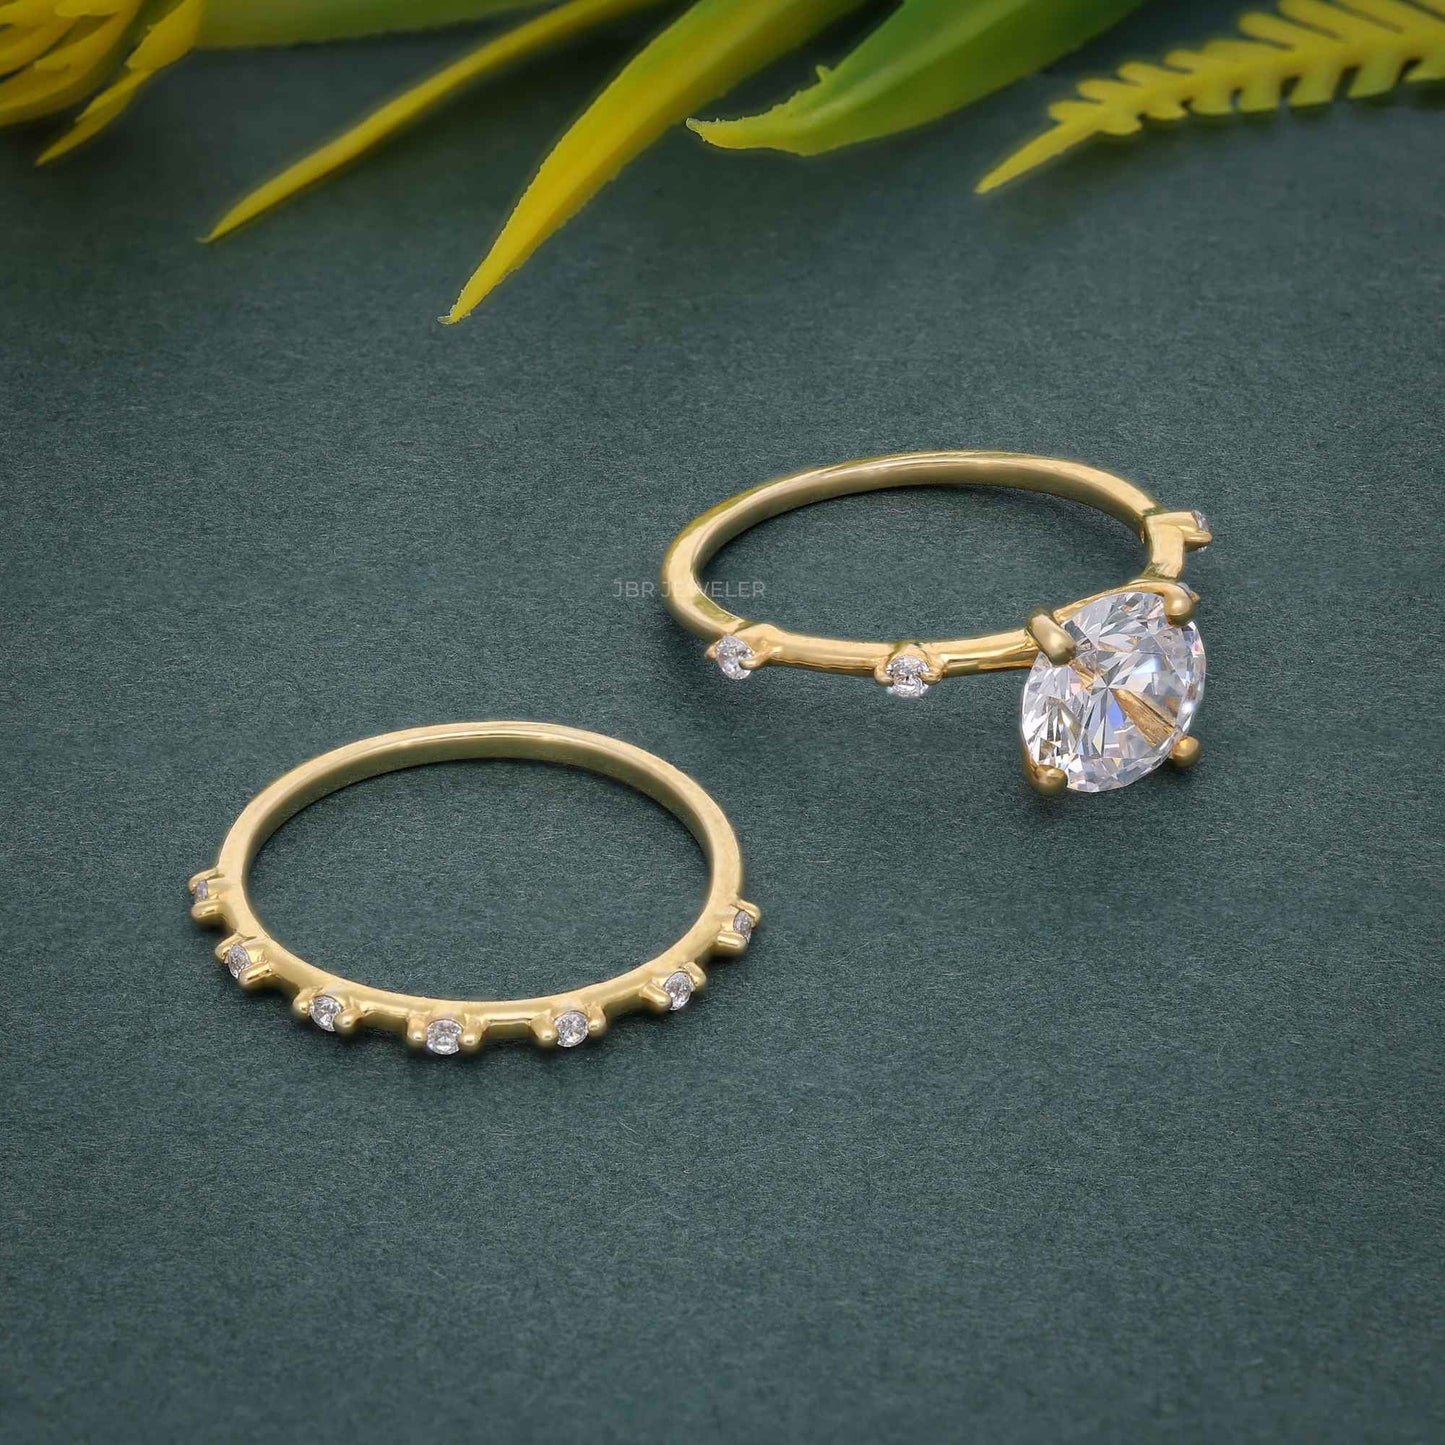 Round Cut Lab Grown Engagement Ring With Matching Bridal Ring Set